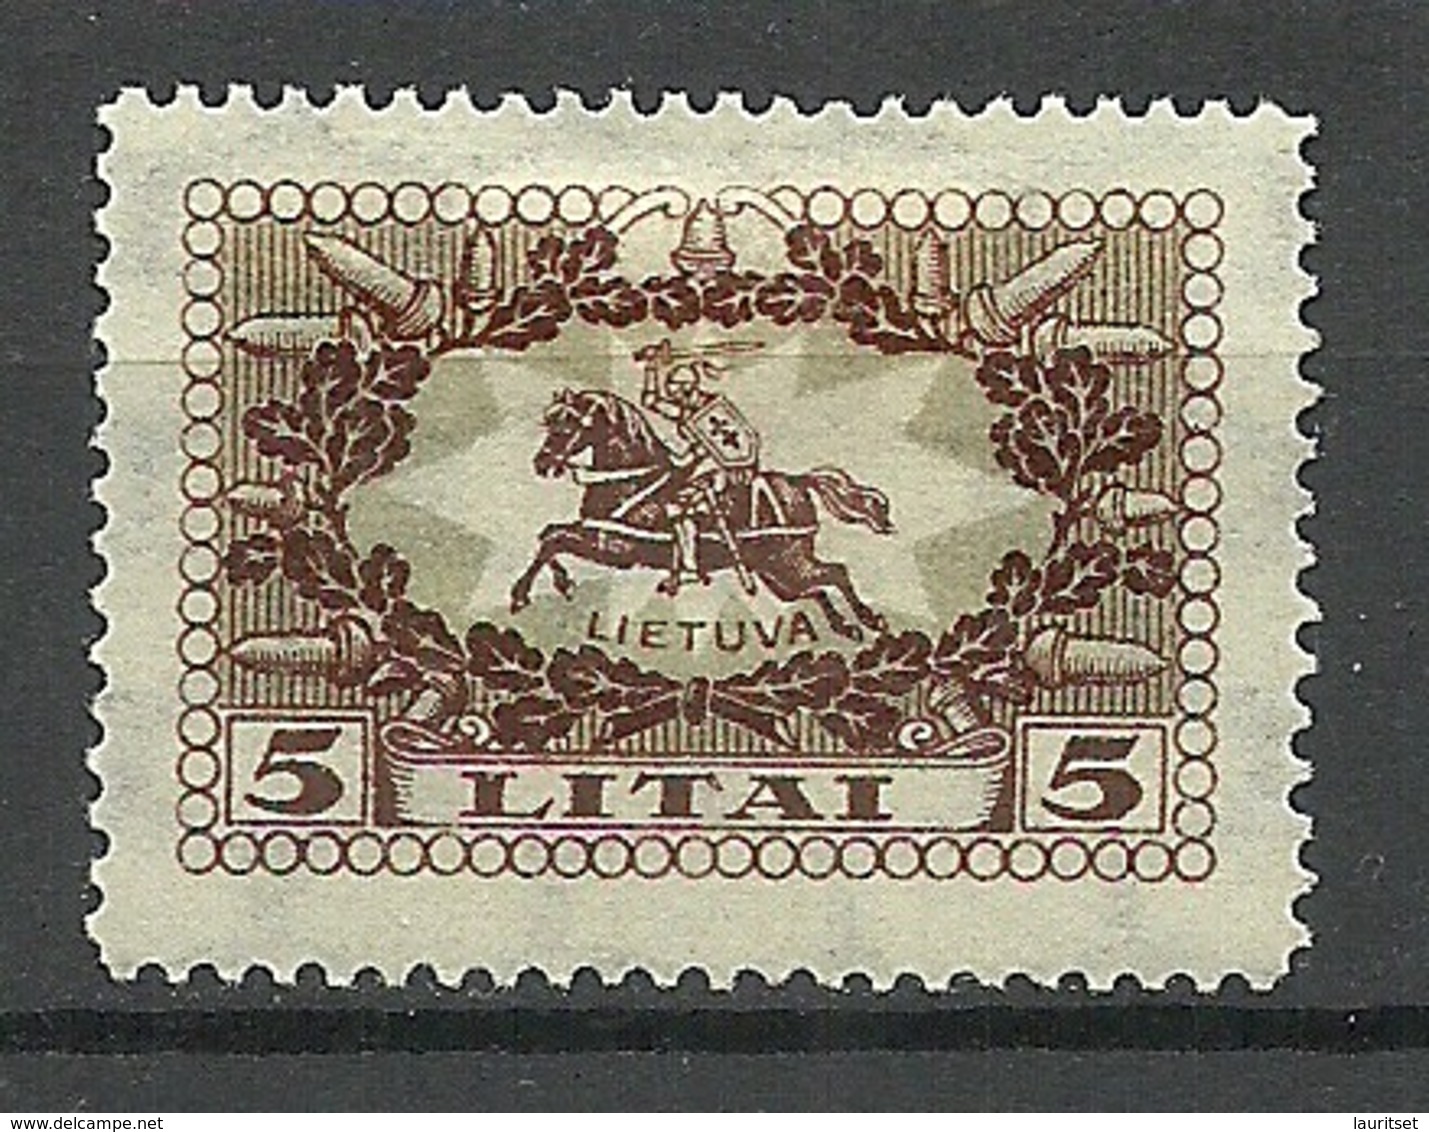 LITAUEN Lithuania 1927 Michel 280 * - Litauen